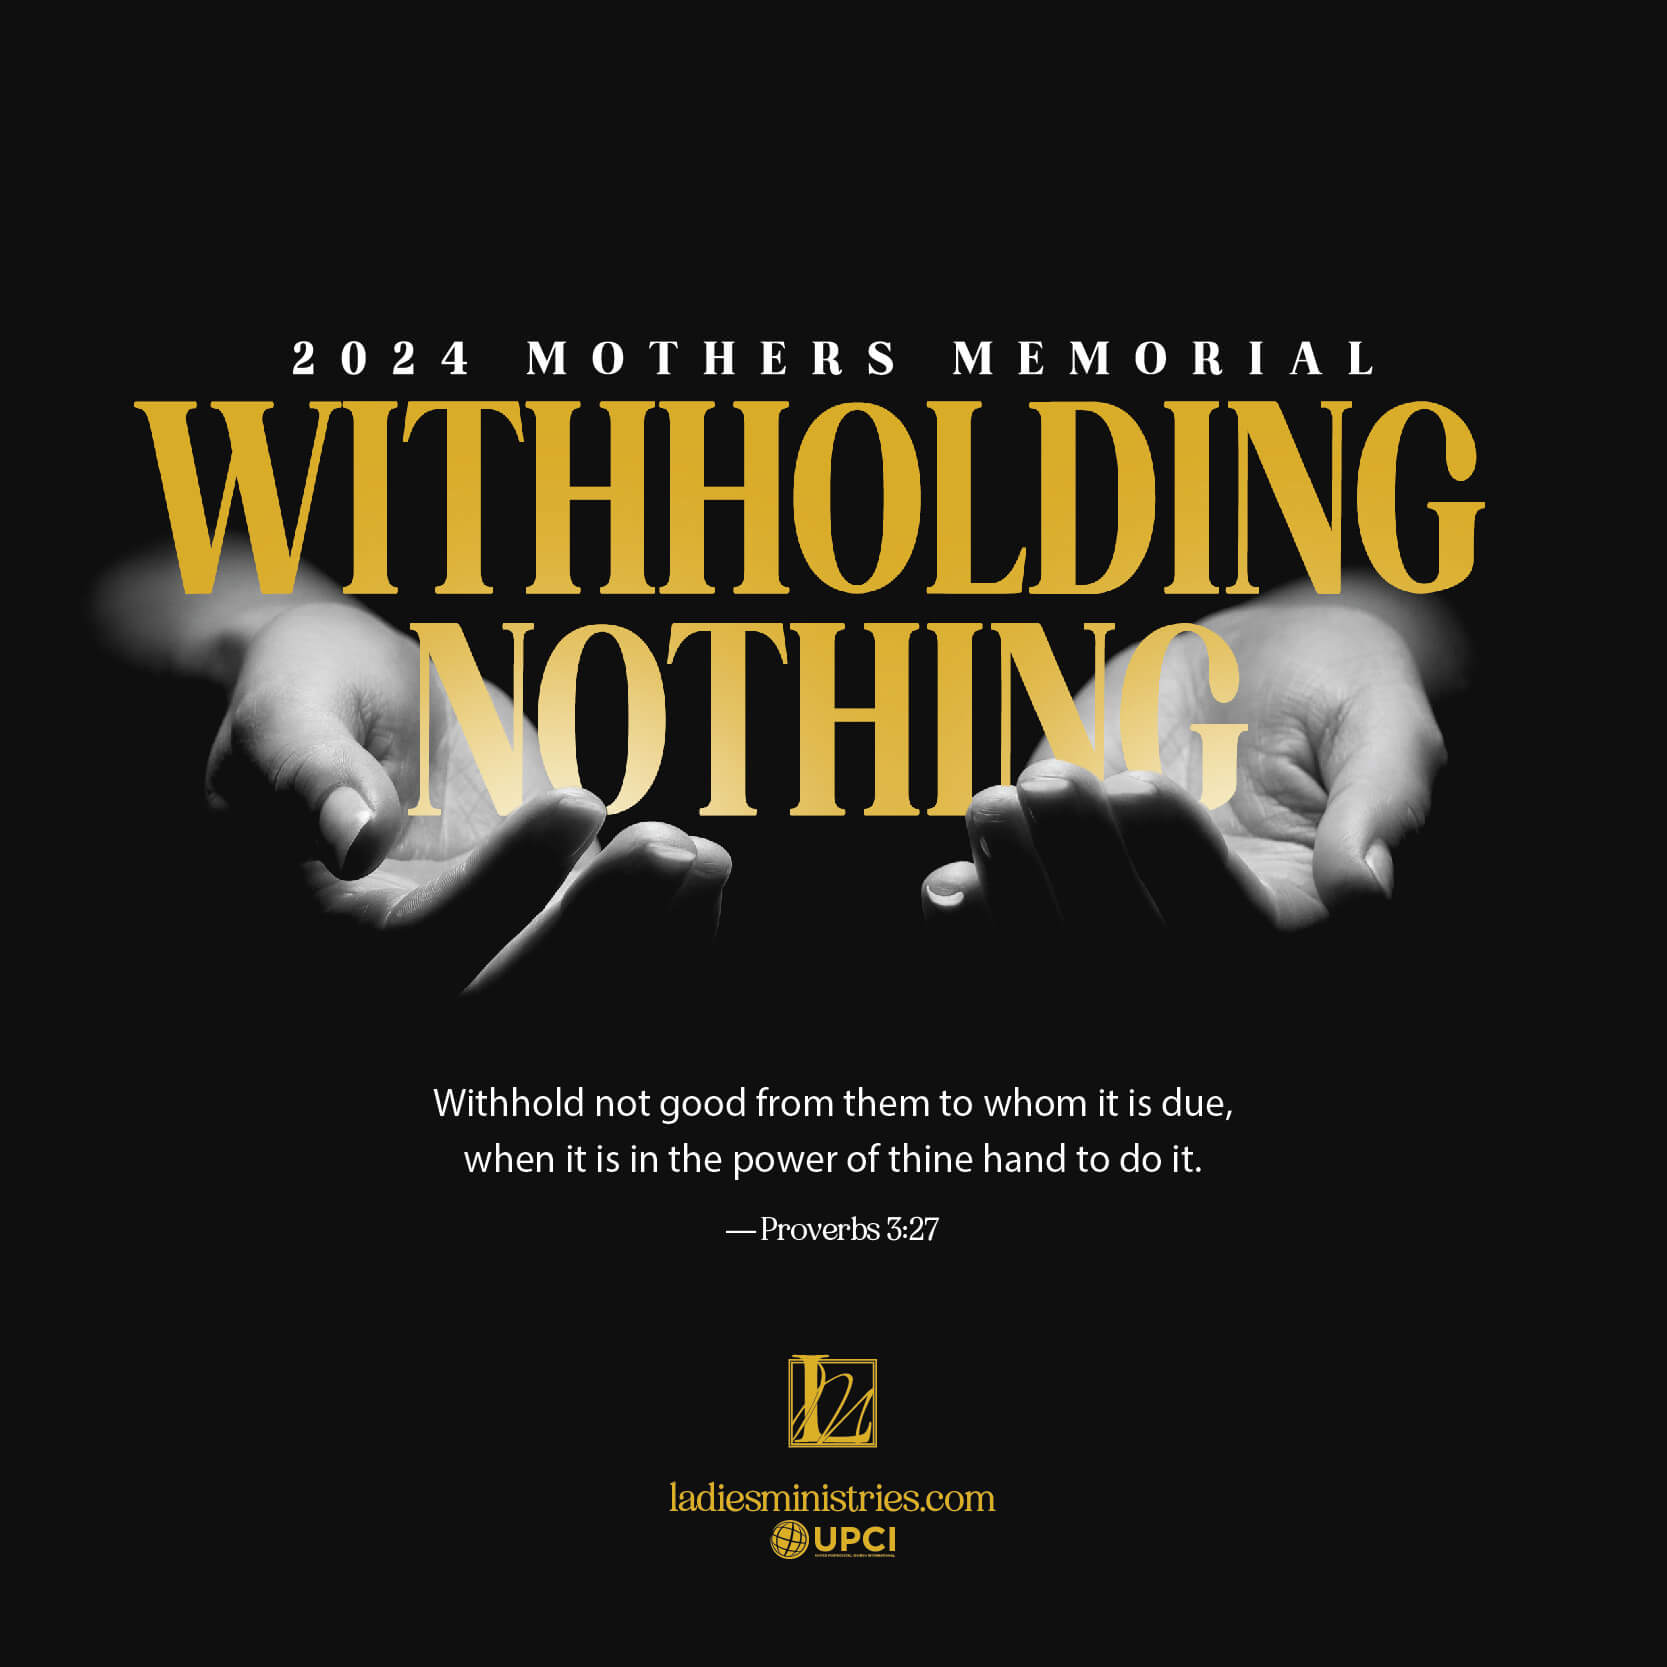 WithholdingNothing_socialmedia_theme_post